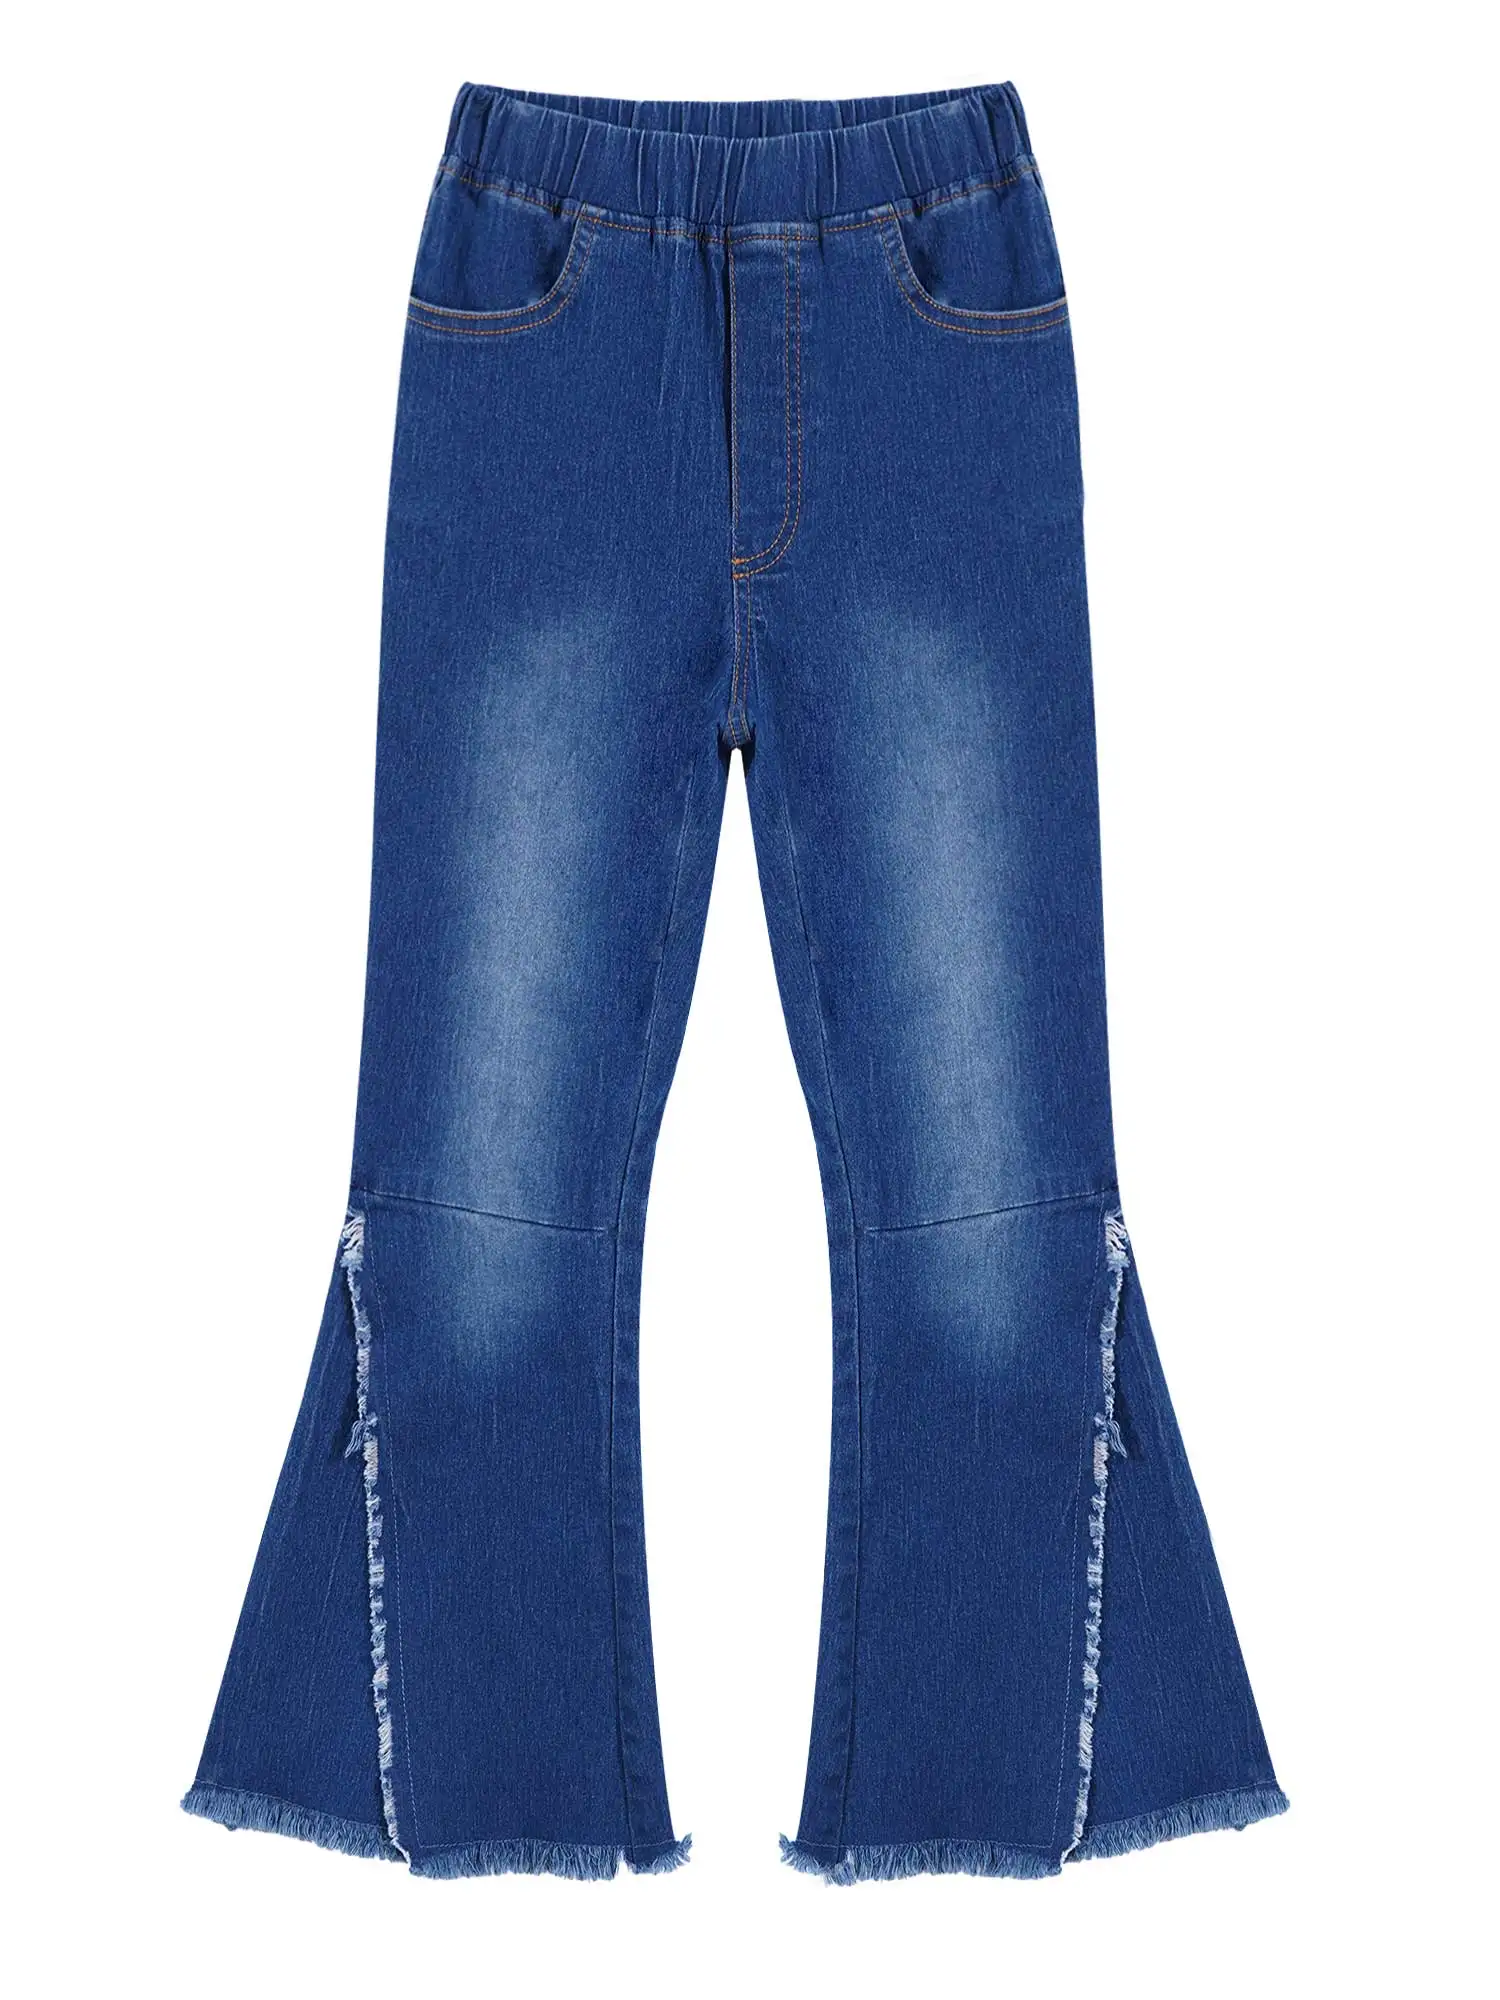 

Kids Girls Bell-bottomed Jeans Girls Pents Fashion Clothing Elastic Waistband Crisscross Ripped Hem Denim Casual Wide-leg Pants